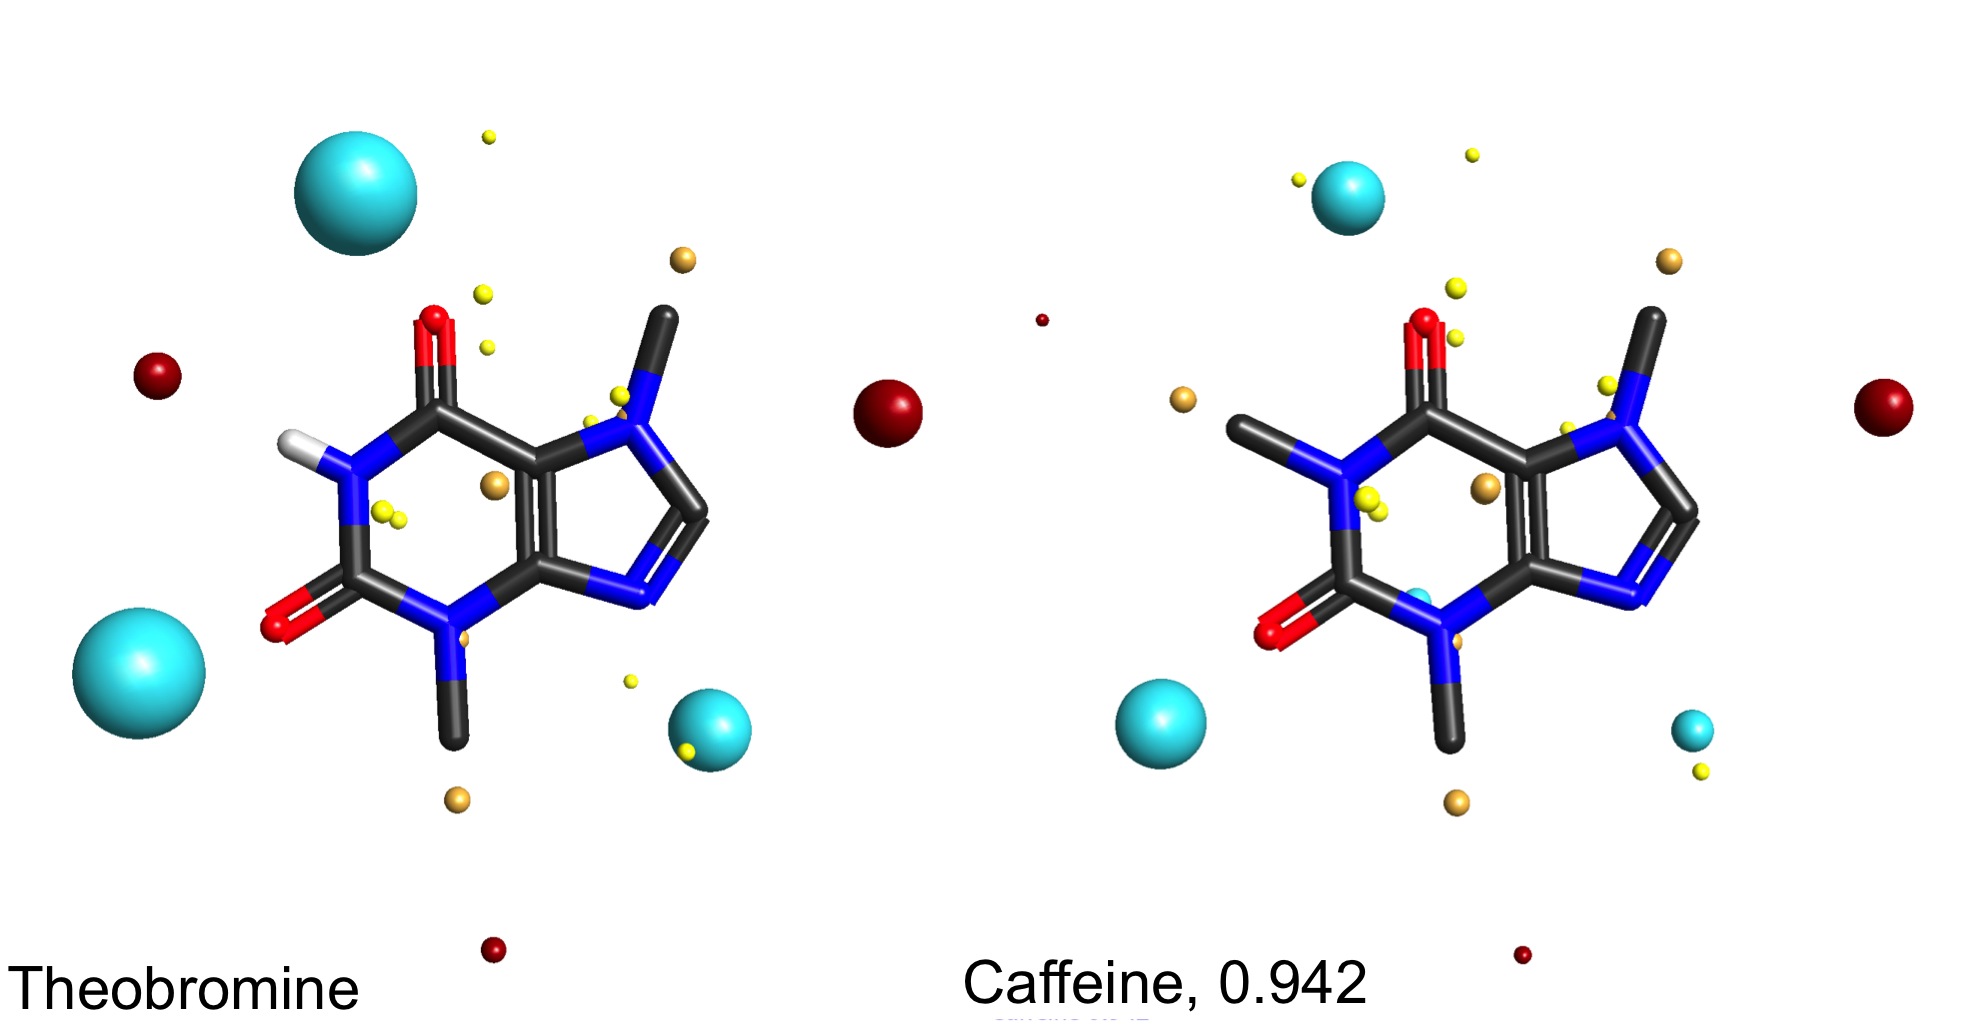 Theobromine with caffeine